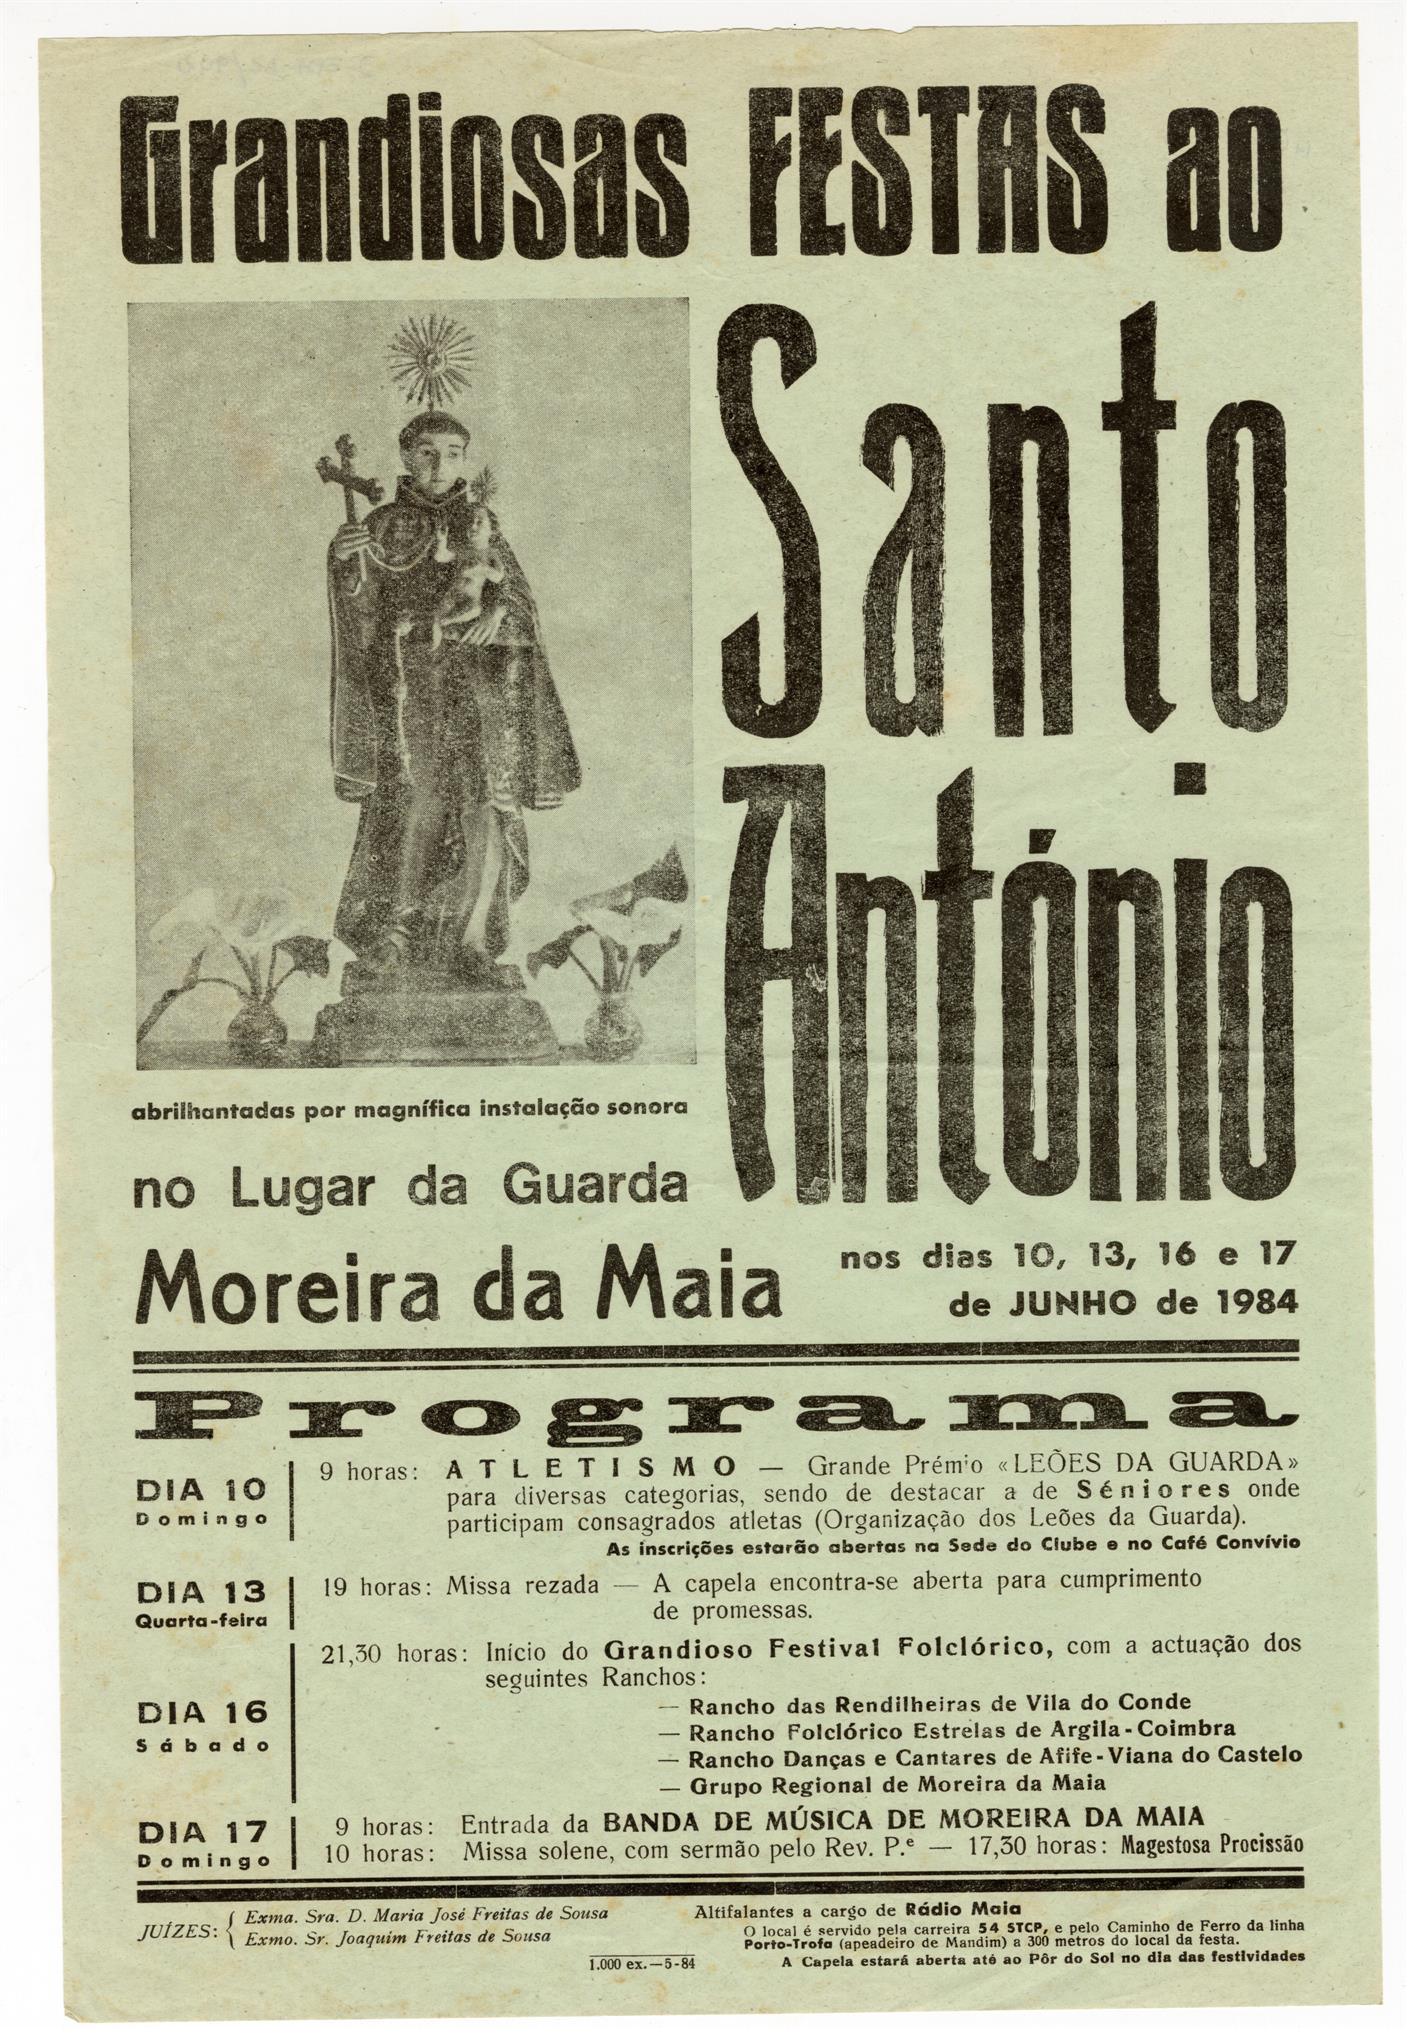 Grandiosas festas ao Santo António no lugar da Guarda, Moreira da Maia